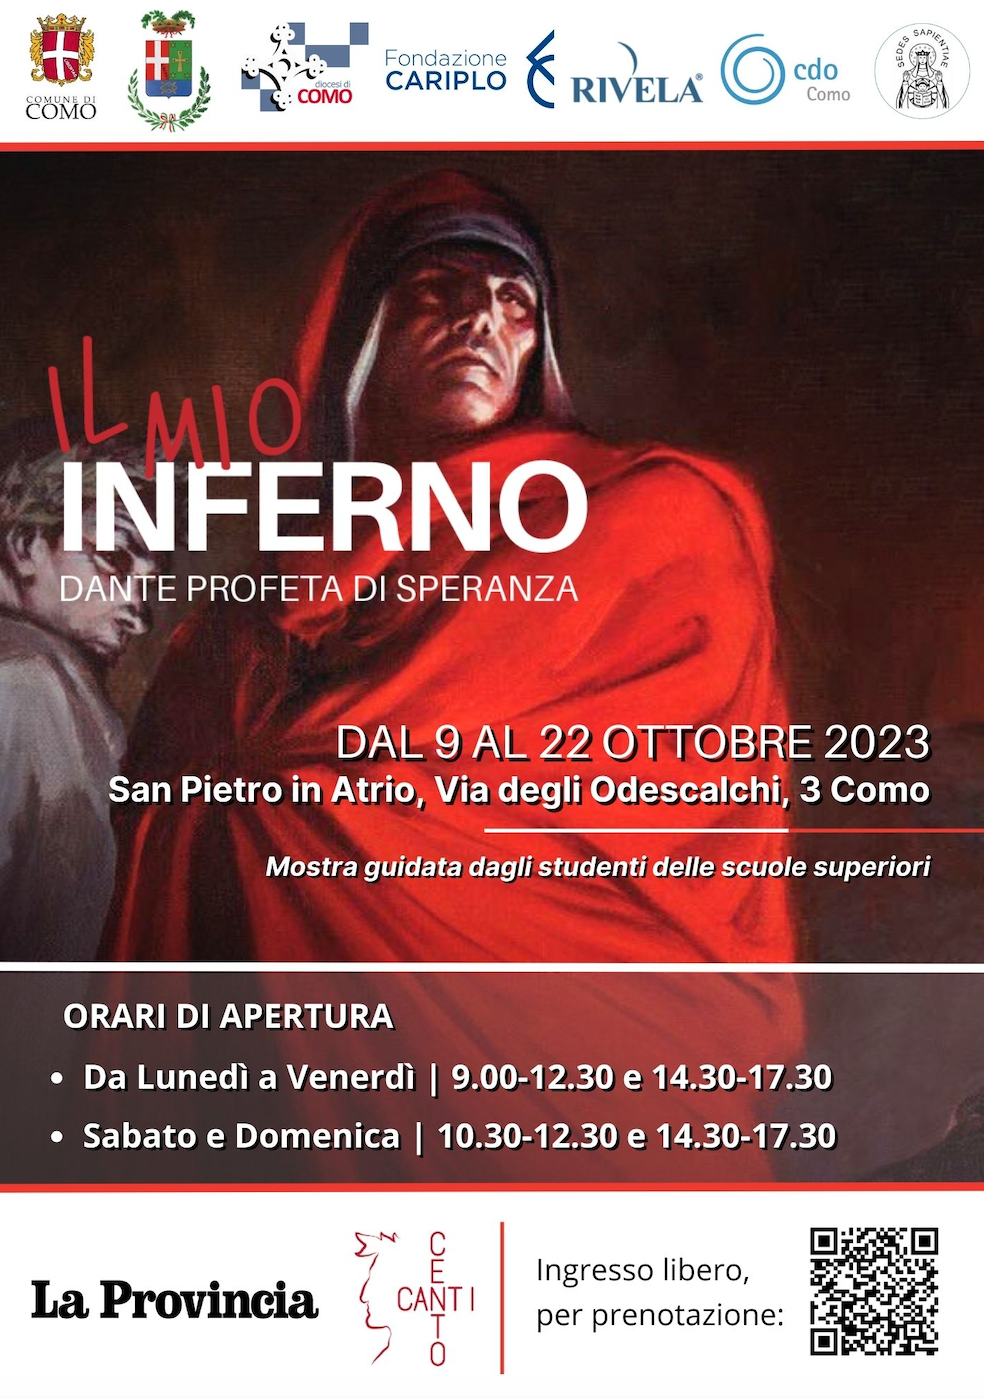 Featured image for “Como: Il mio inferno”